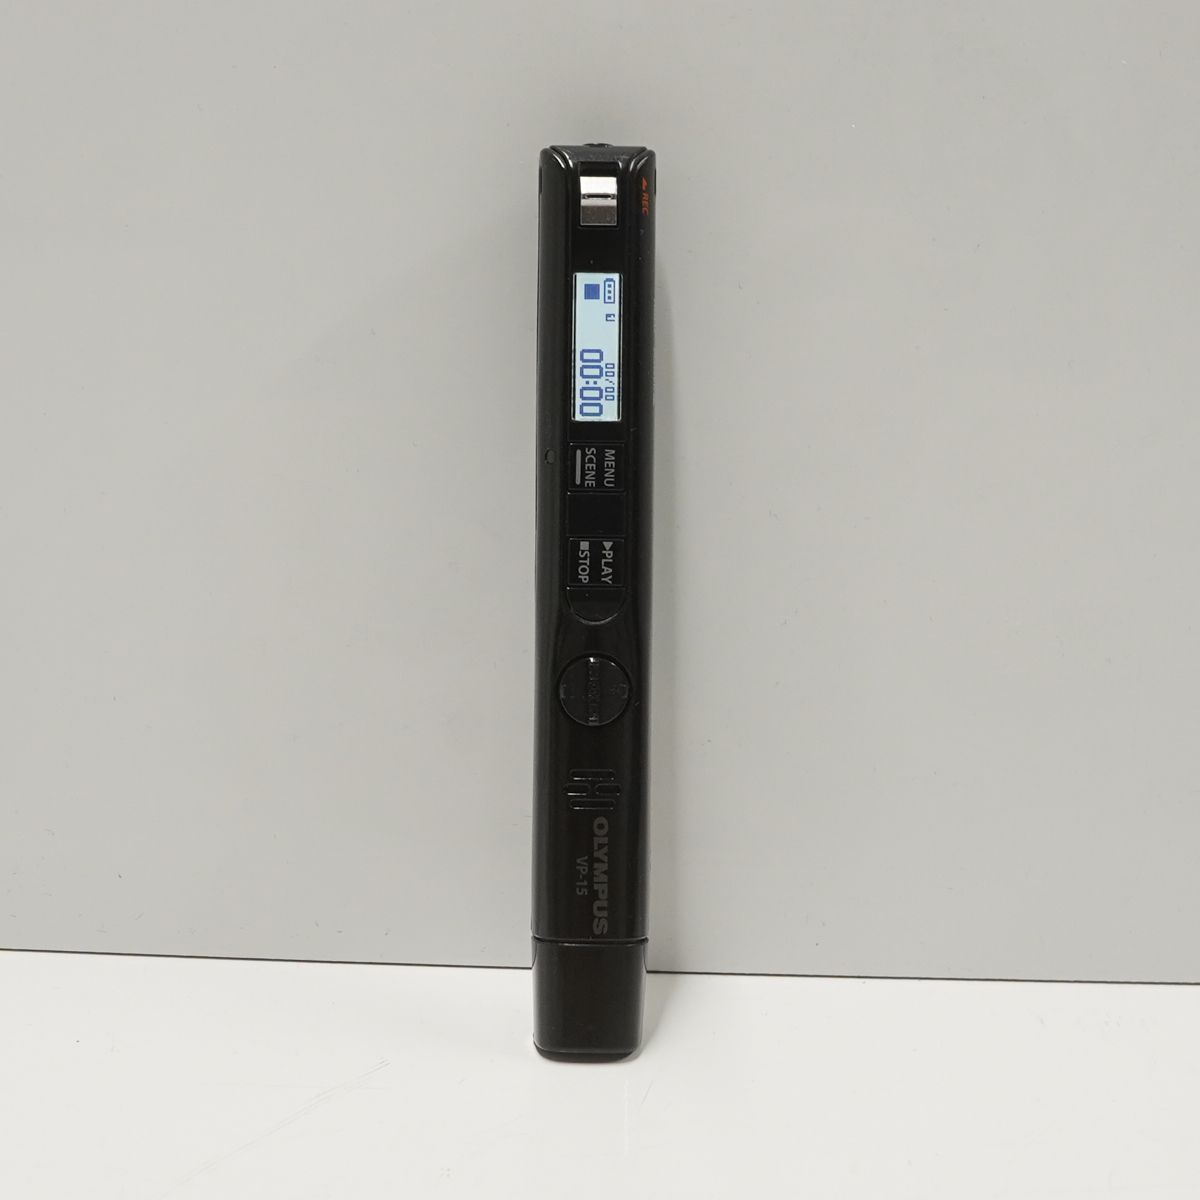 OLYMPUS VoiceTrek VP-15 ICレコーダー USED美品 4GB 録音 ボイスレコーダー 完動品 中古 X4489 